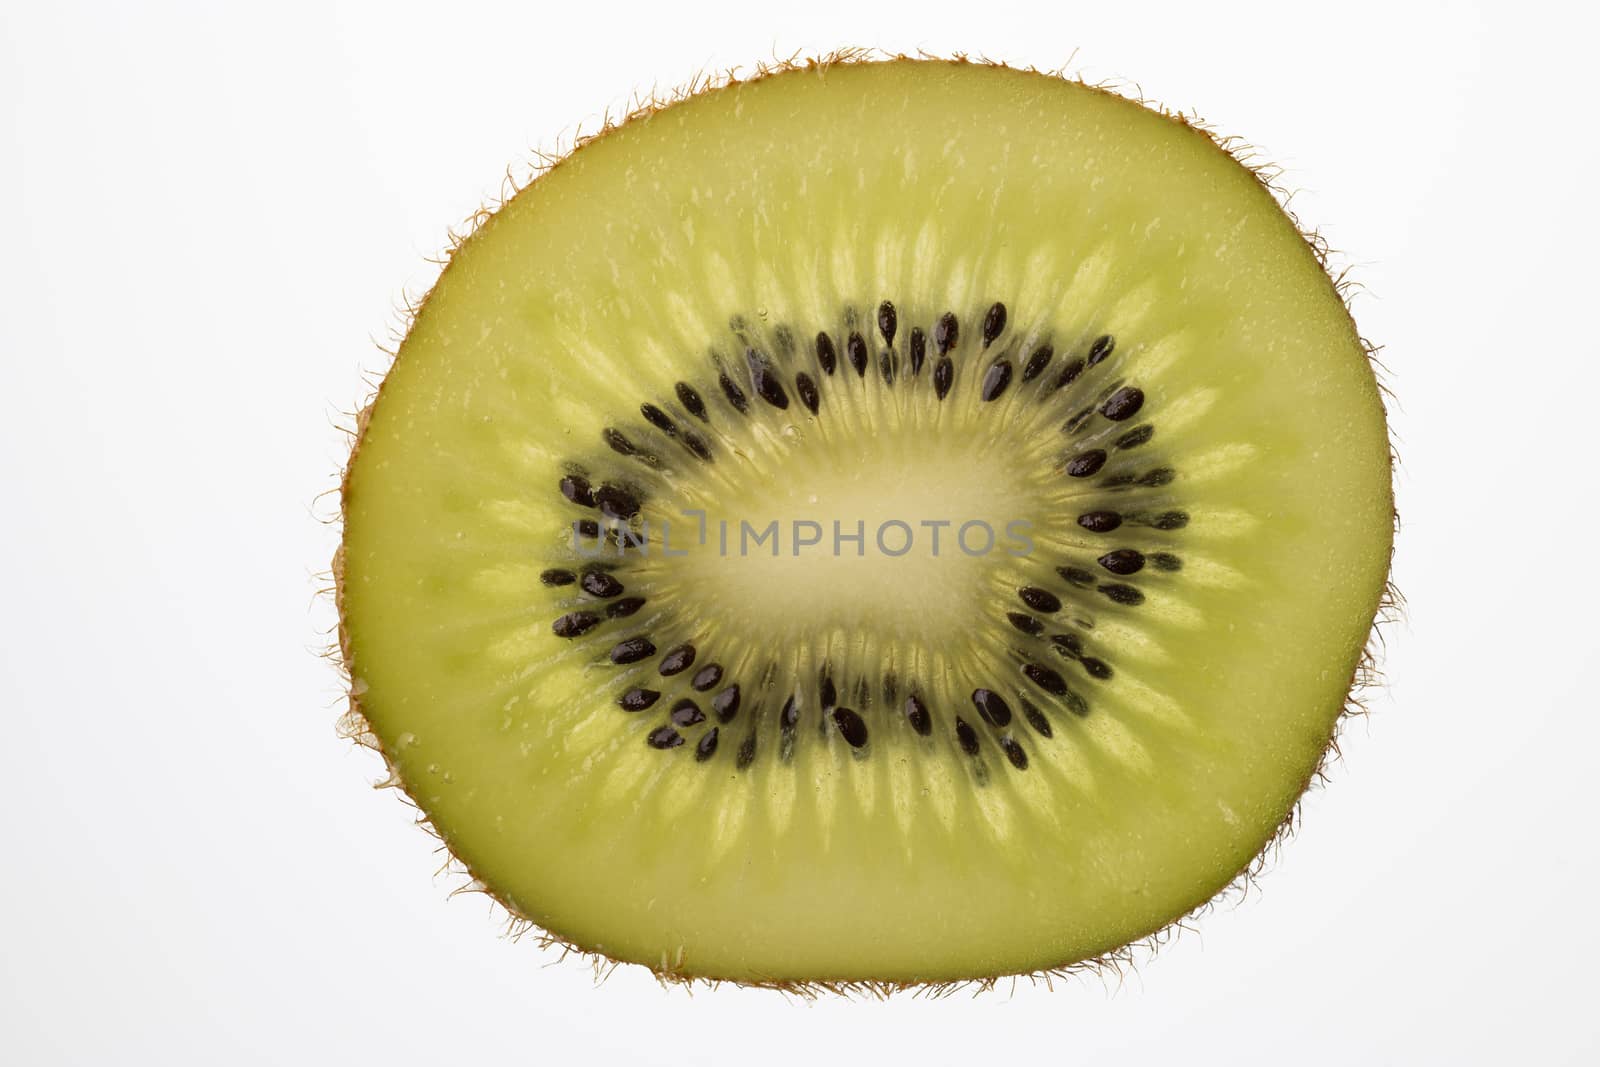 Slice of Kiwi fruit cut in backlight foto shot by Tofotografie